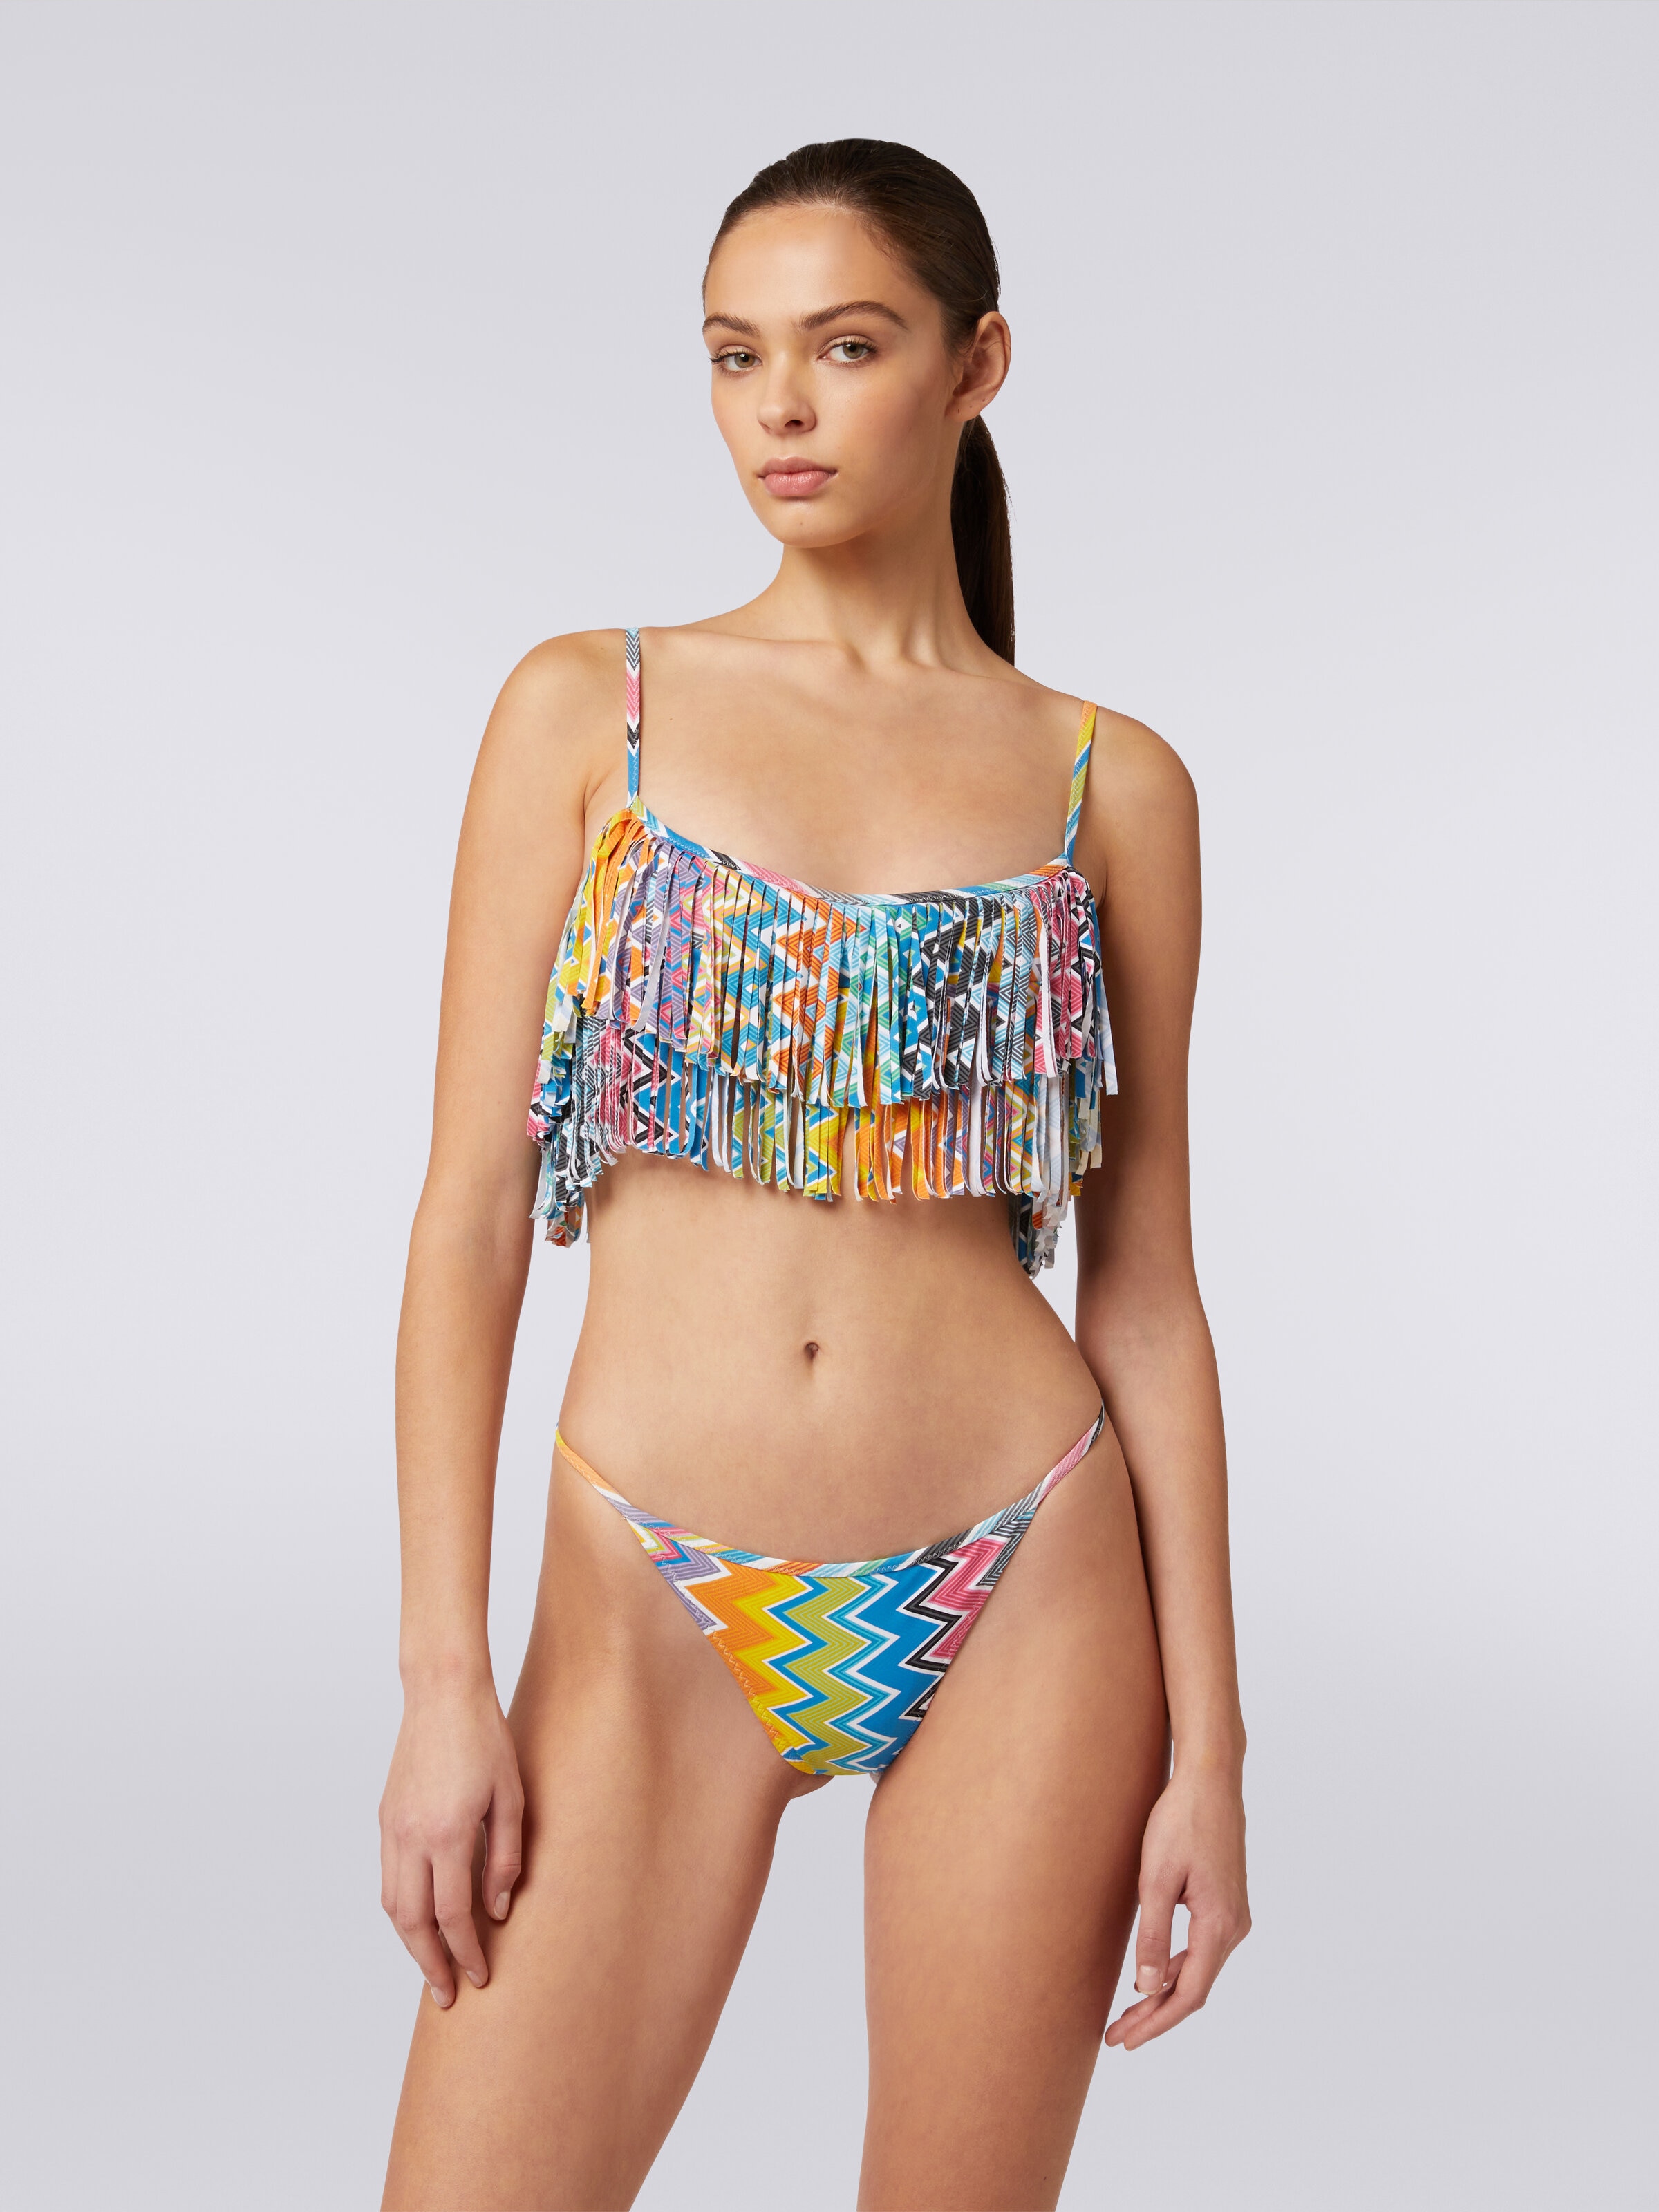 Printed stretch fabric bikini with fringed top, Multicoloured  - 1